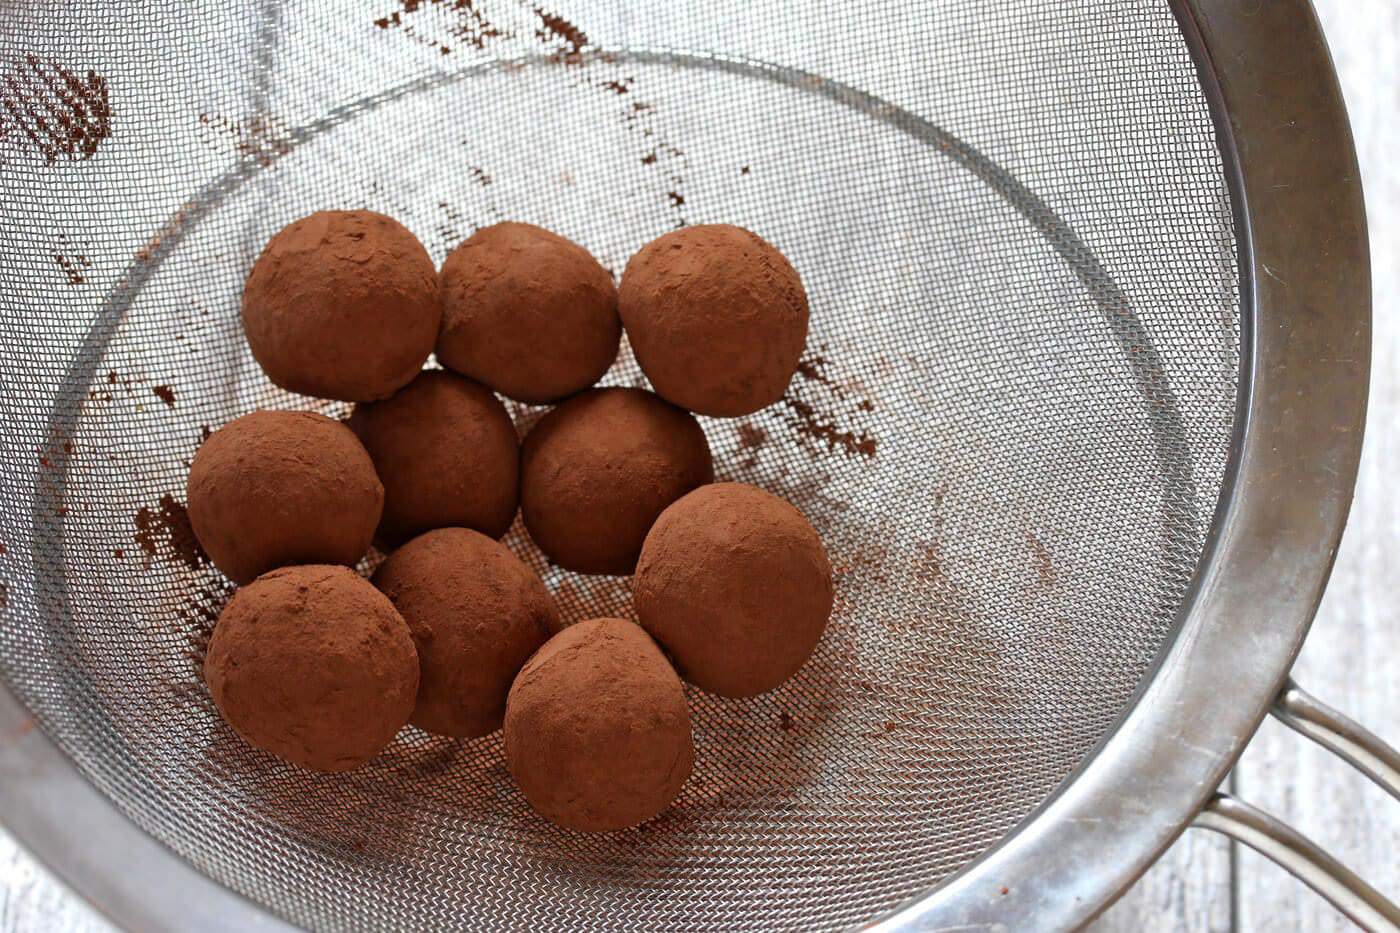 german marzipankartoffeln chocolate coated marzipan potatoes balls candies recipe 